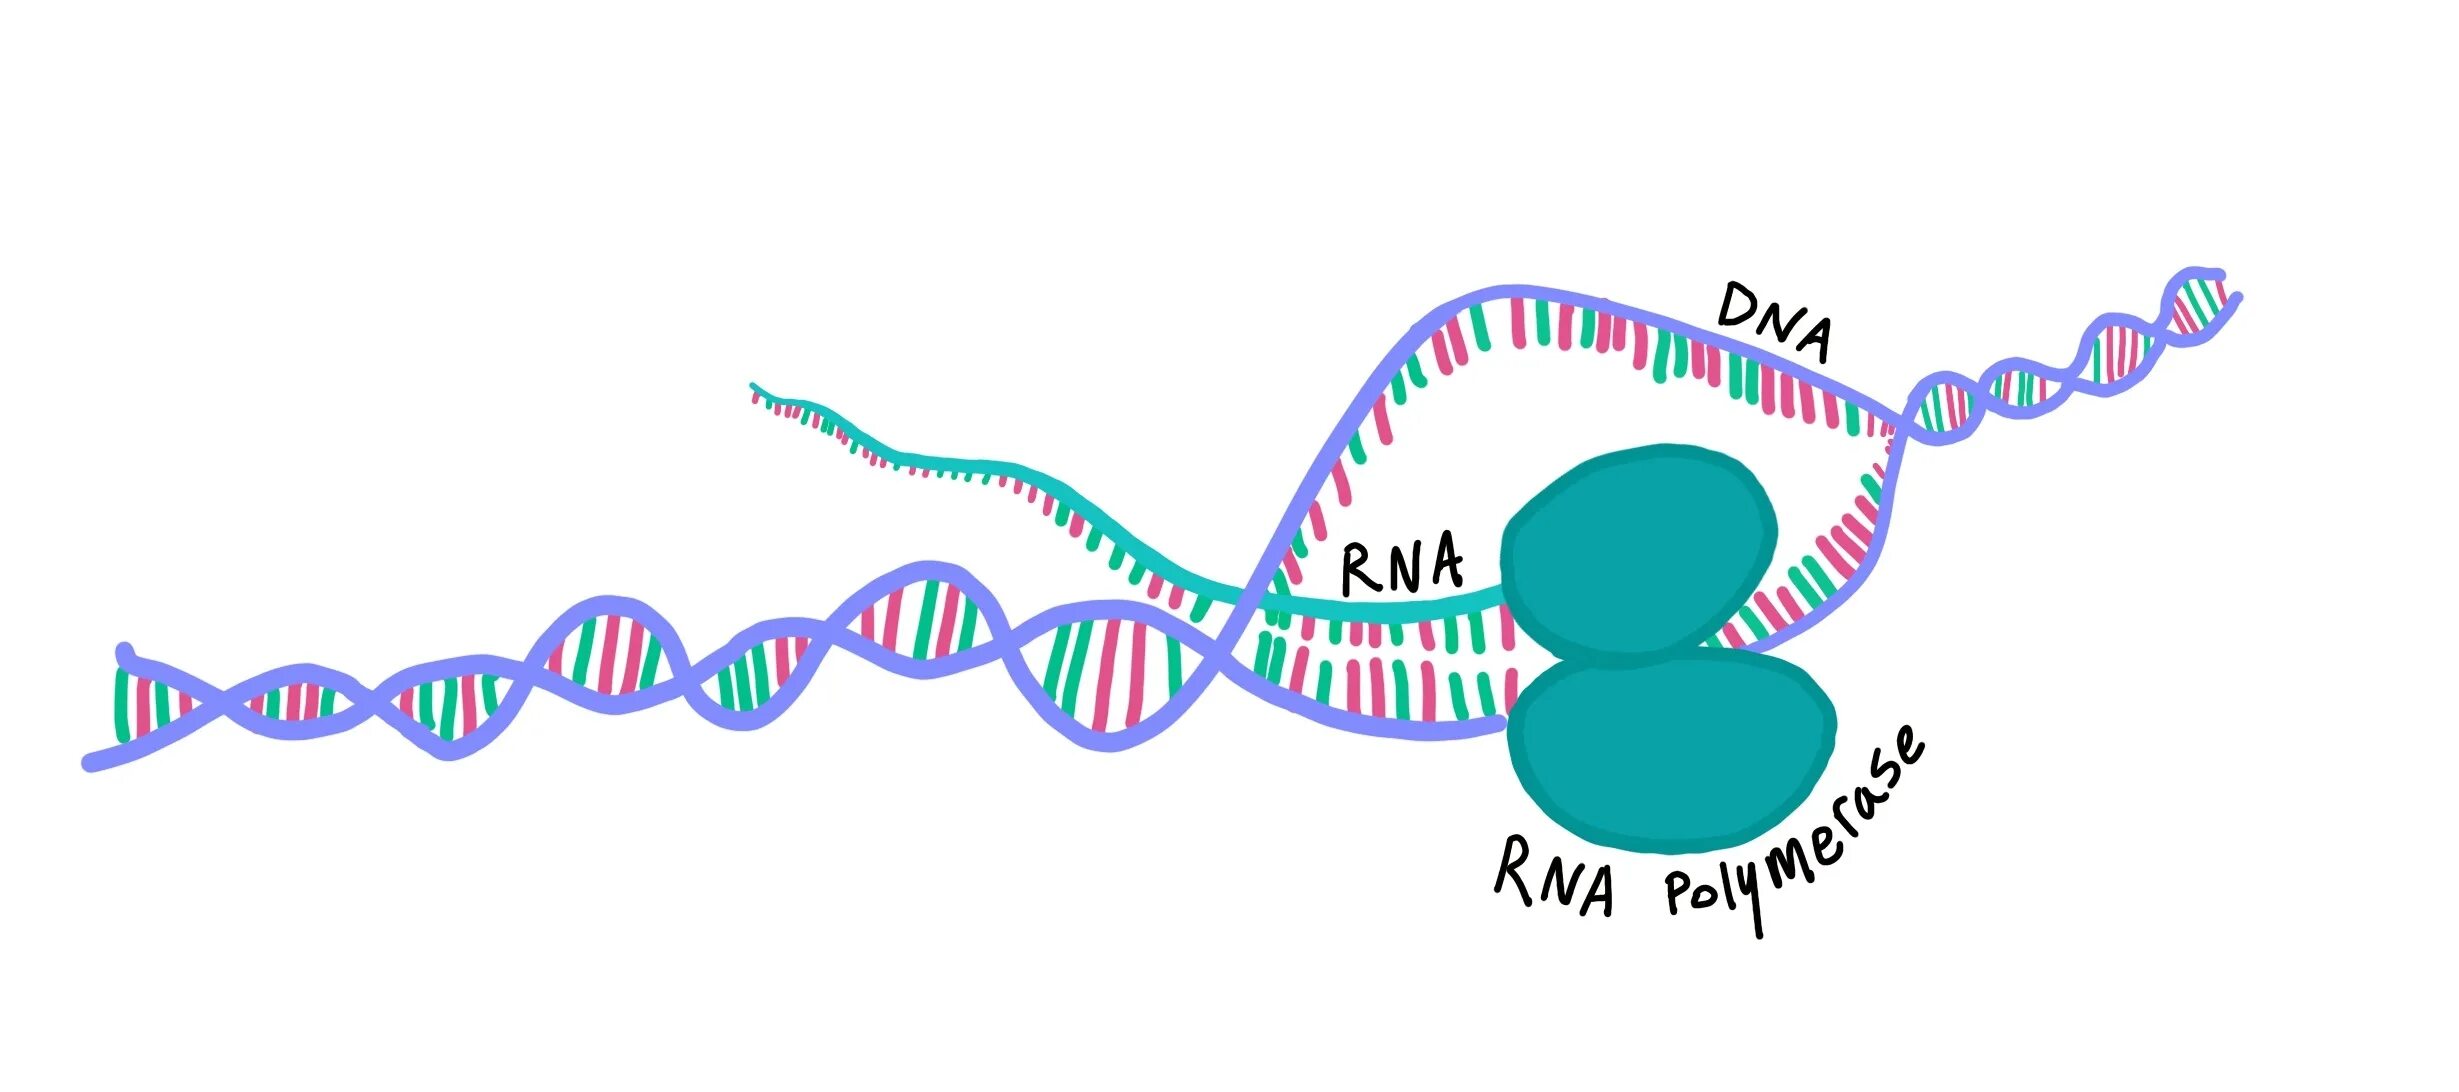 Митохондрия рнк. Синтез РНК транскрипция. Транскрипция РНК полимераза. РНК полимераза репликация. Полимераза RNA.